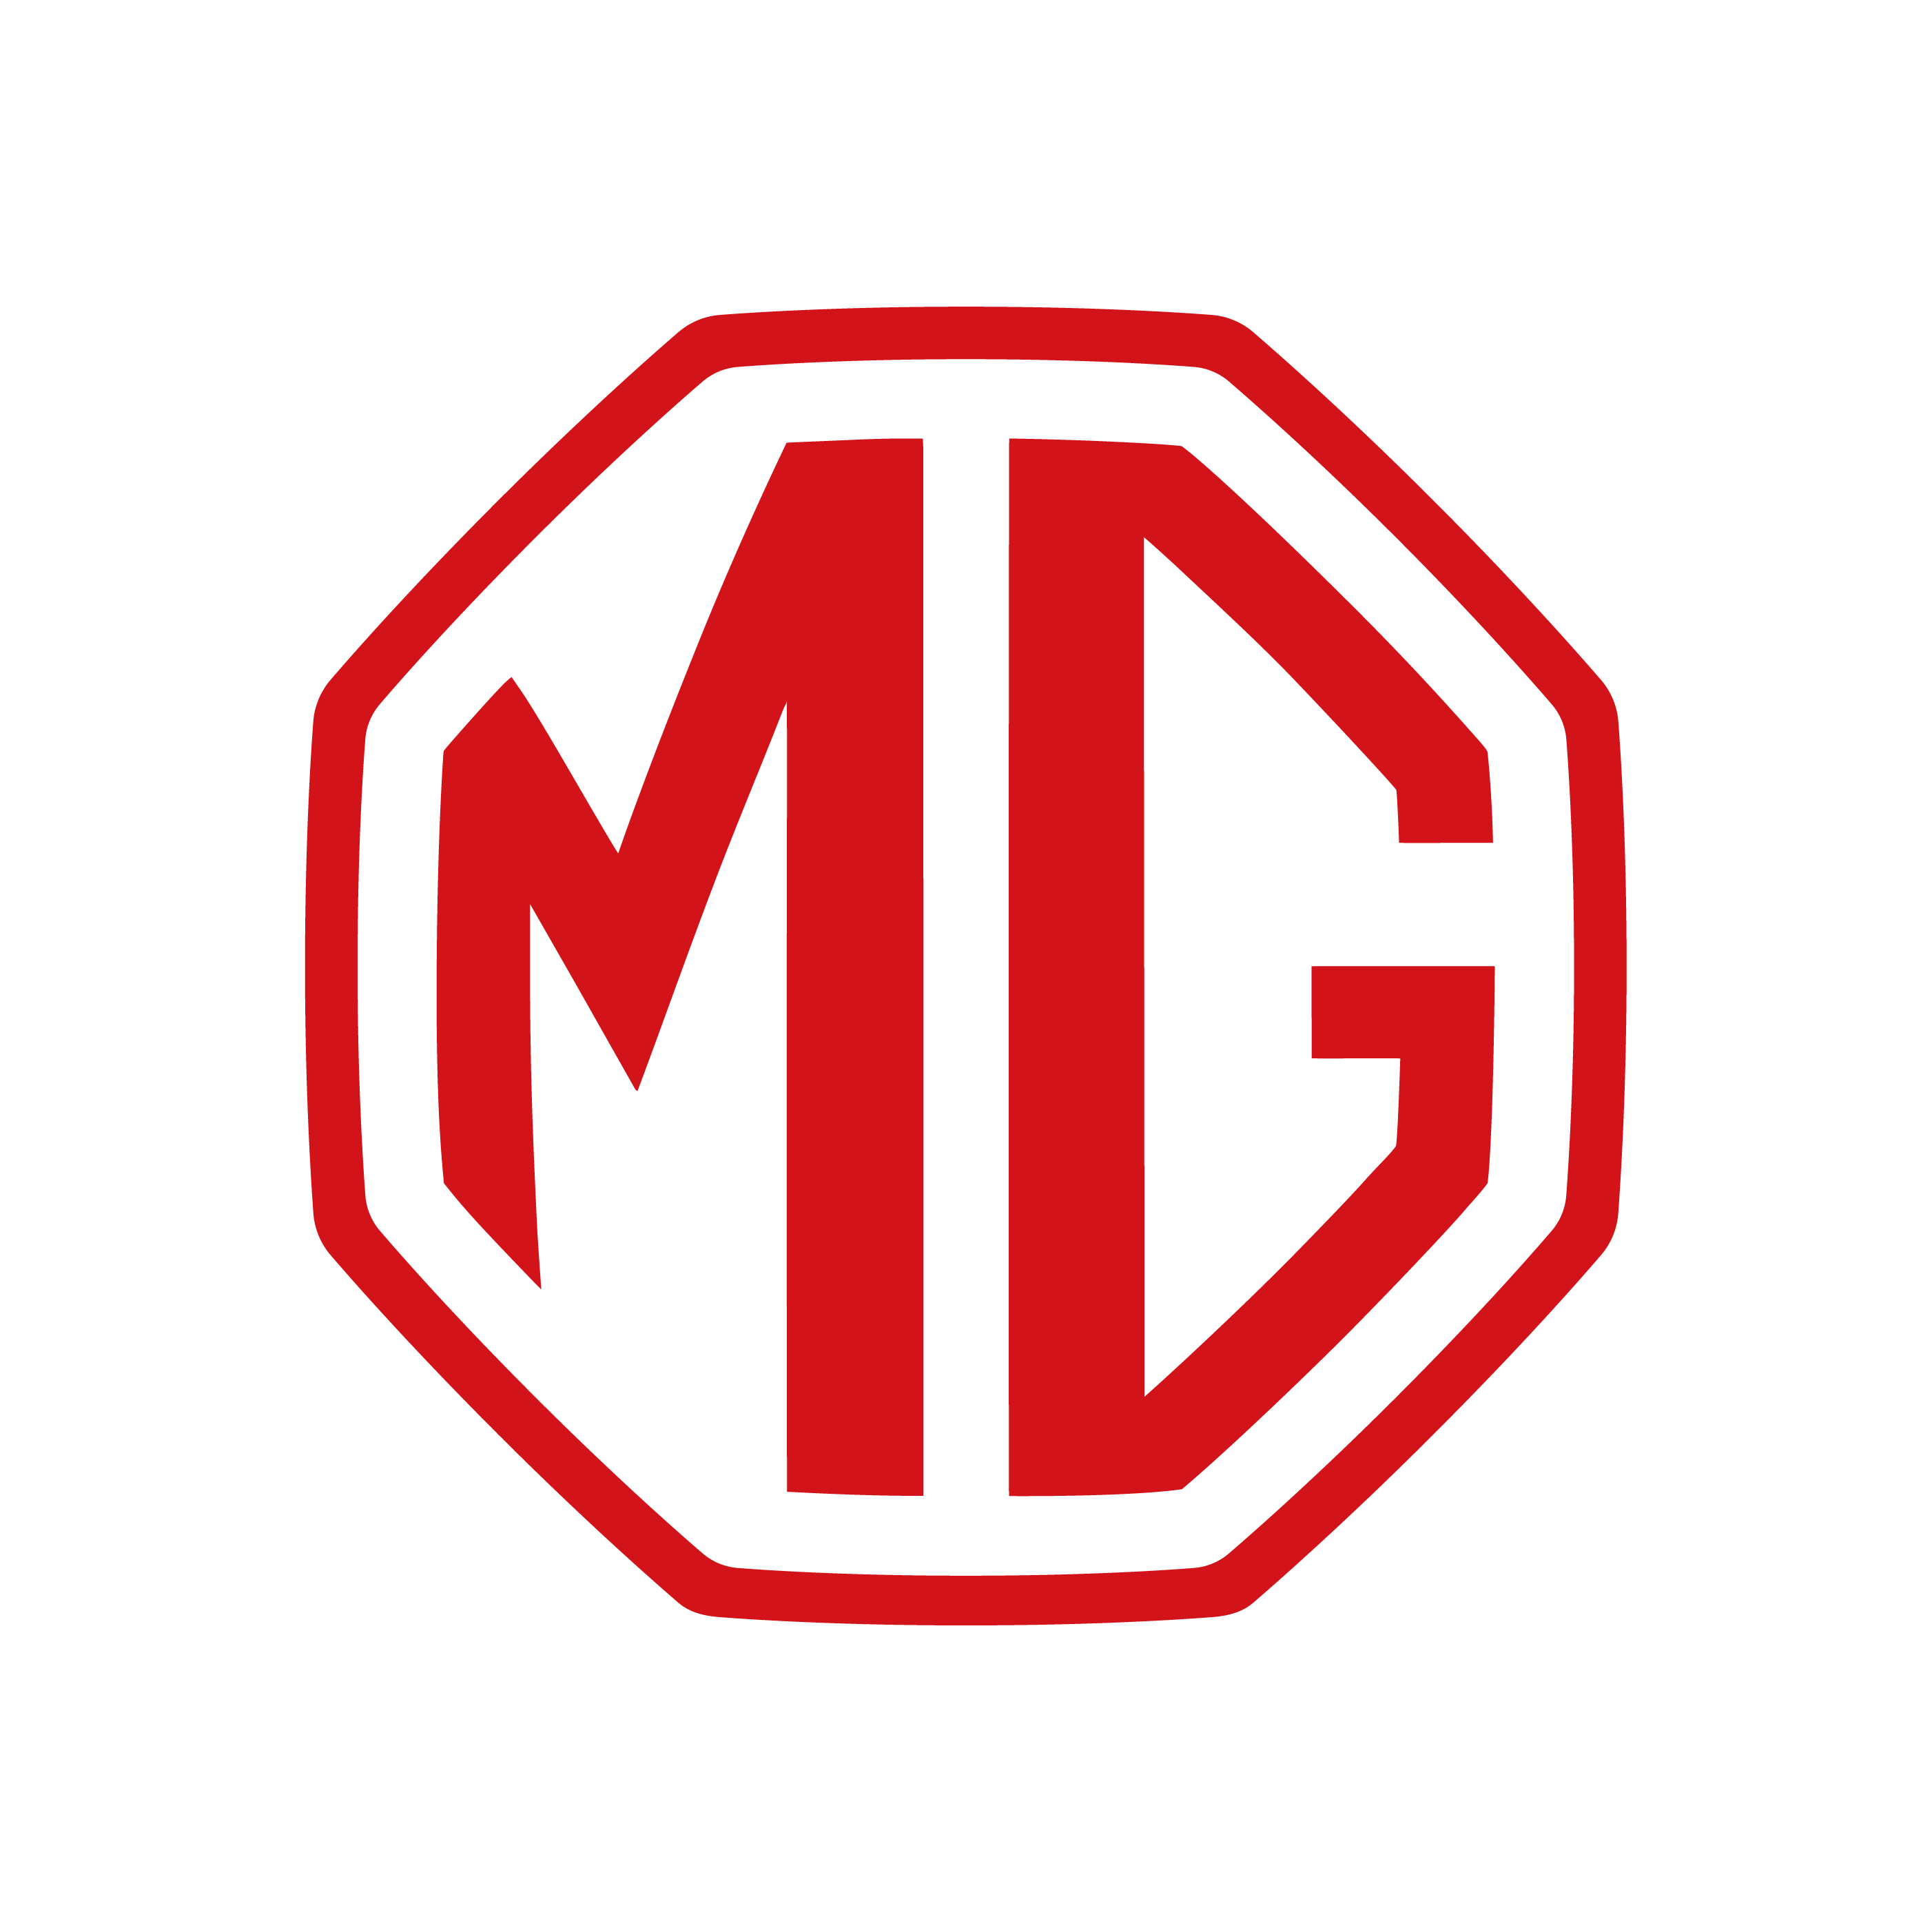 MG logo red